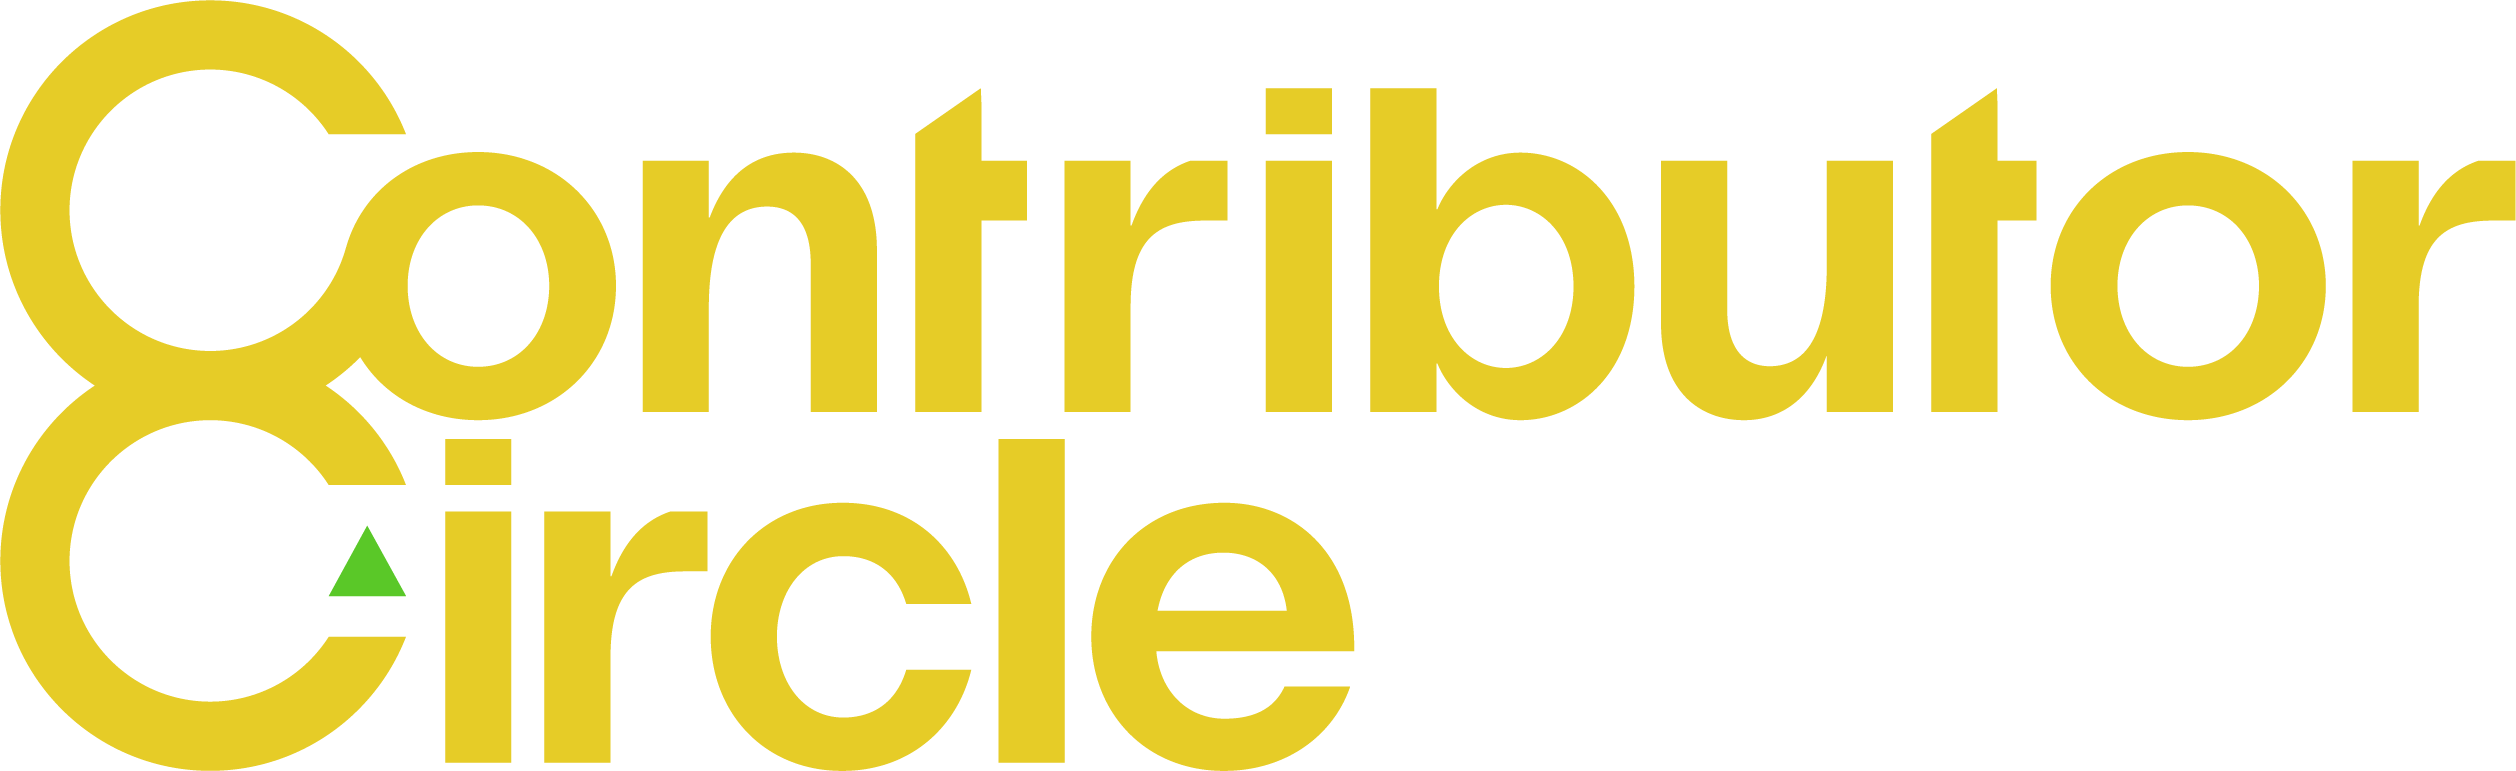 AgFlow Contributor Circle